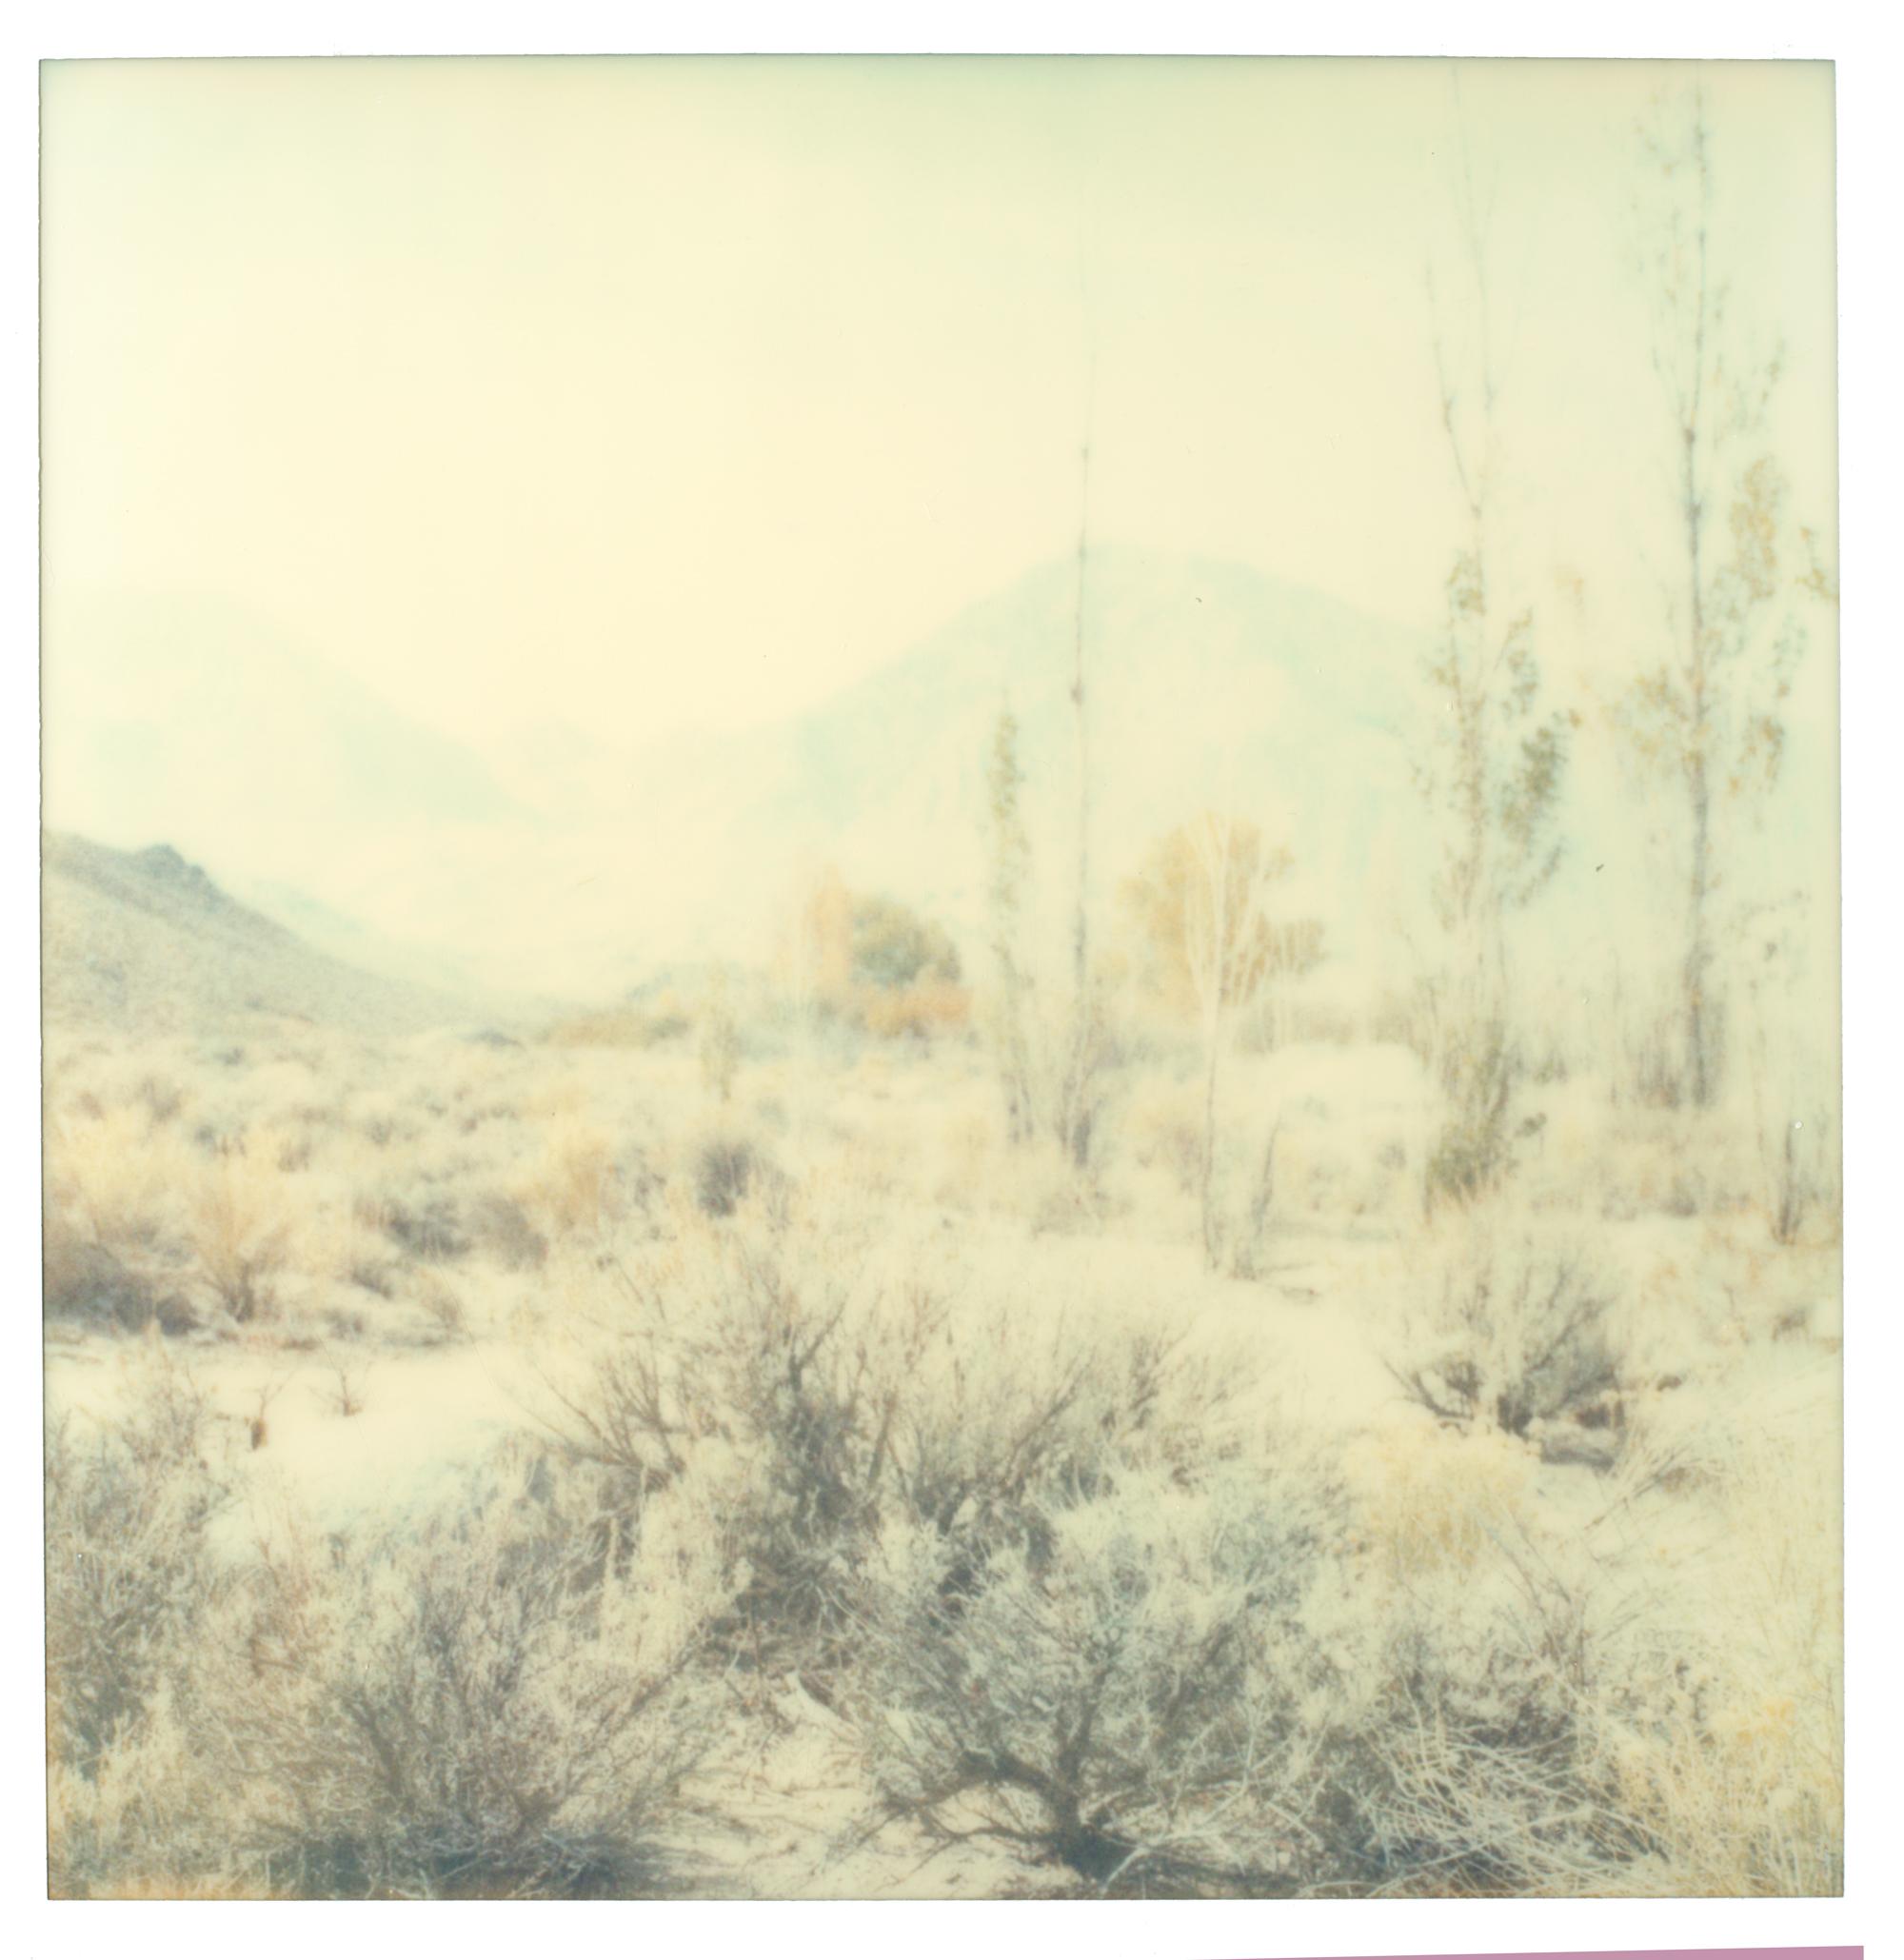 Stefanie Schneider Color Photograph - Wastelands - Polaroid, Expired. Contemporary, Color